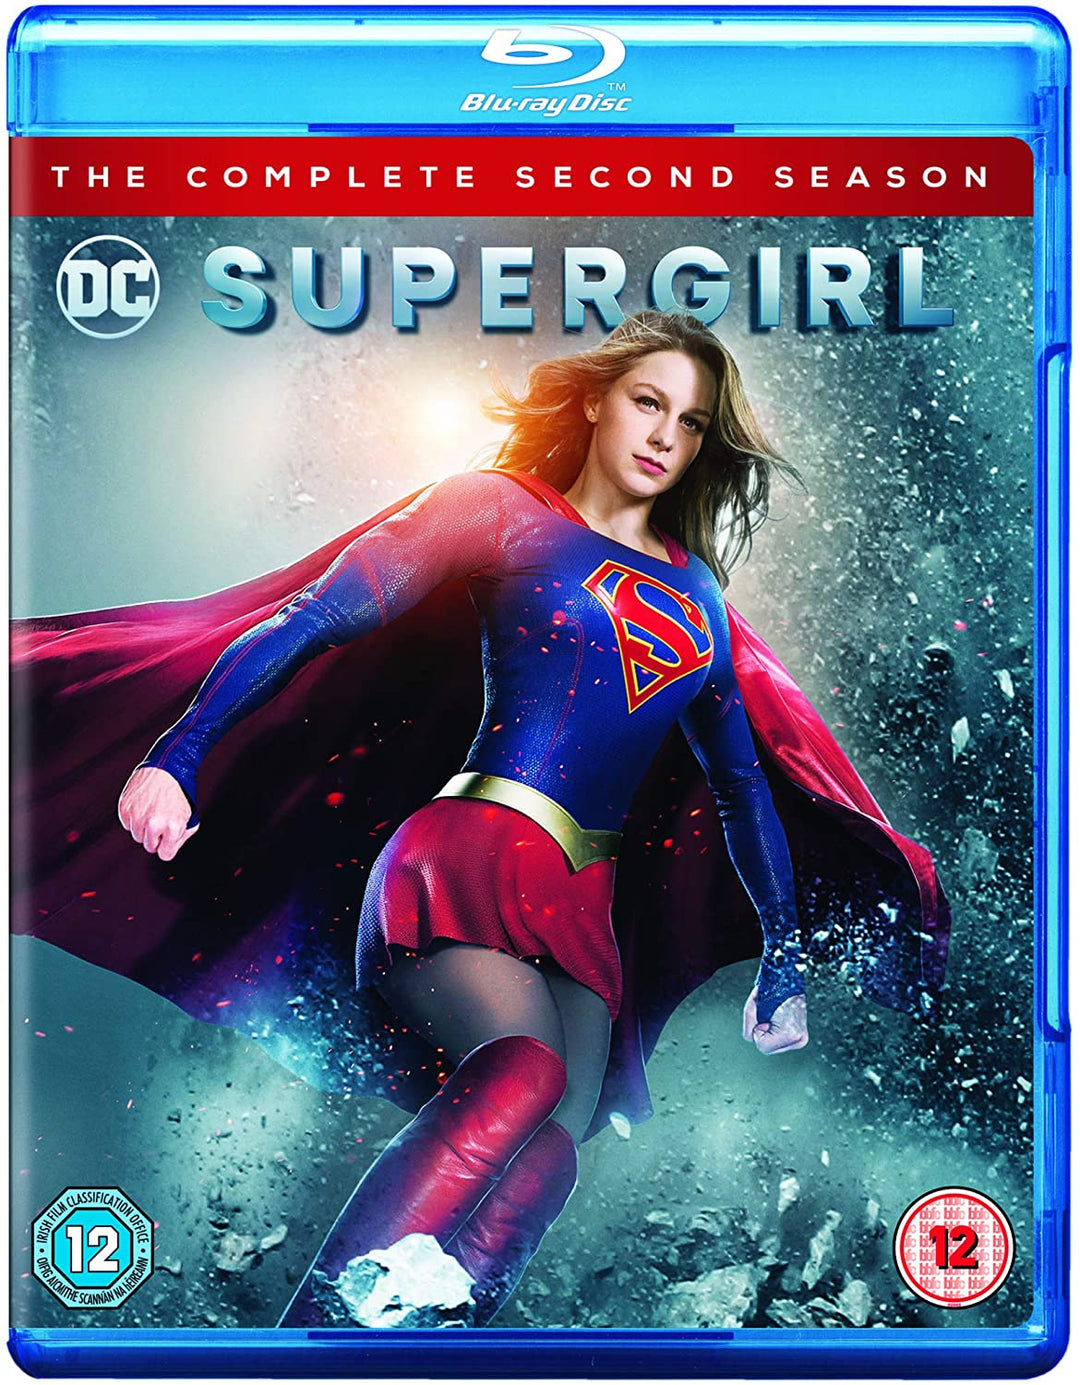 Supergirl Season 2 - Action/Superhero [Blu-ray]